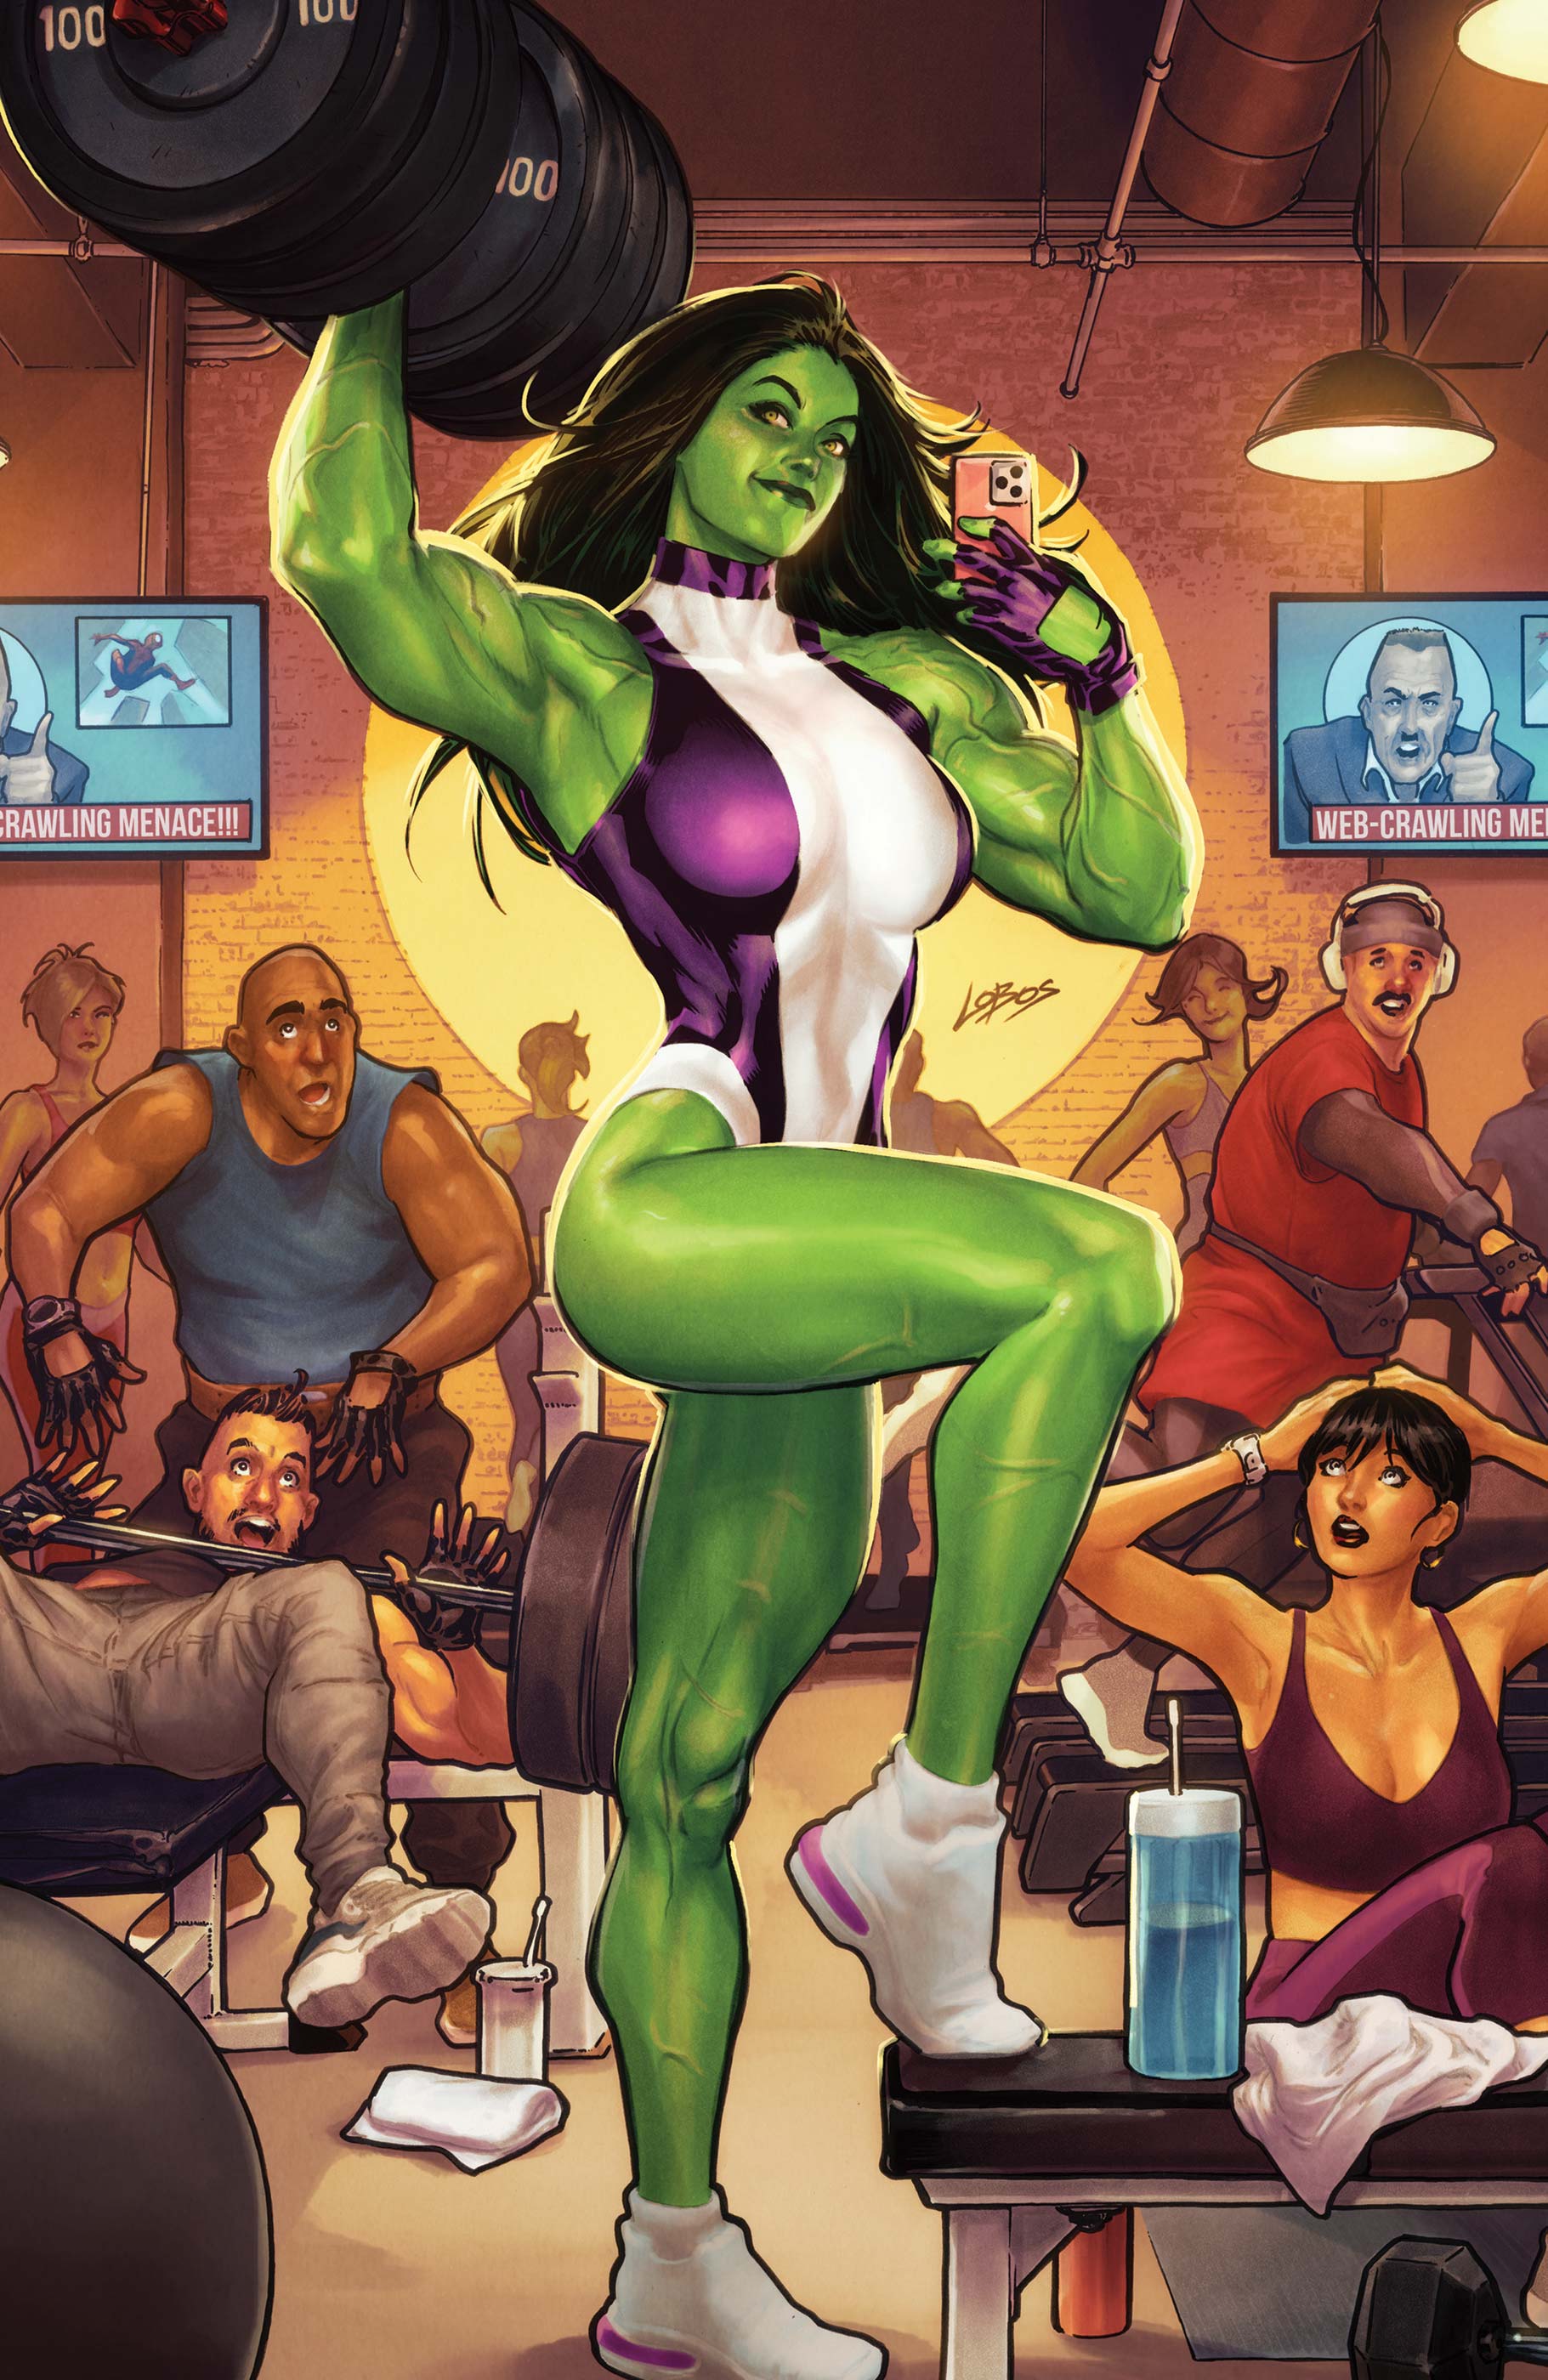 Sensational She-Hulk (2023) #5 (Variant)